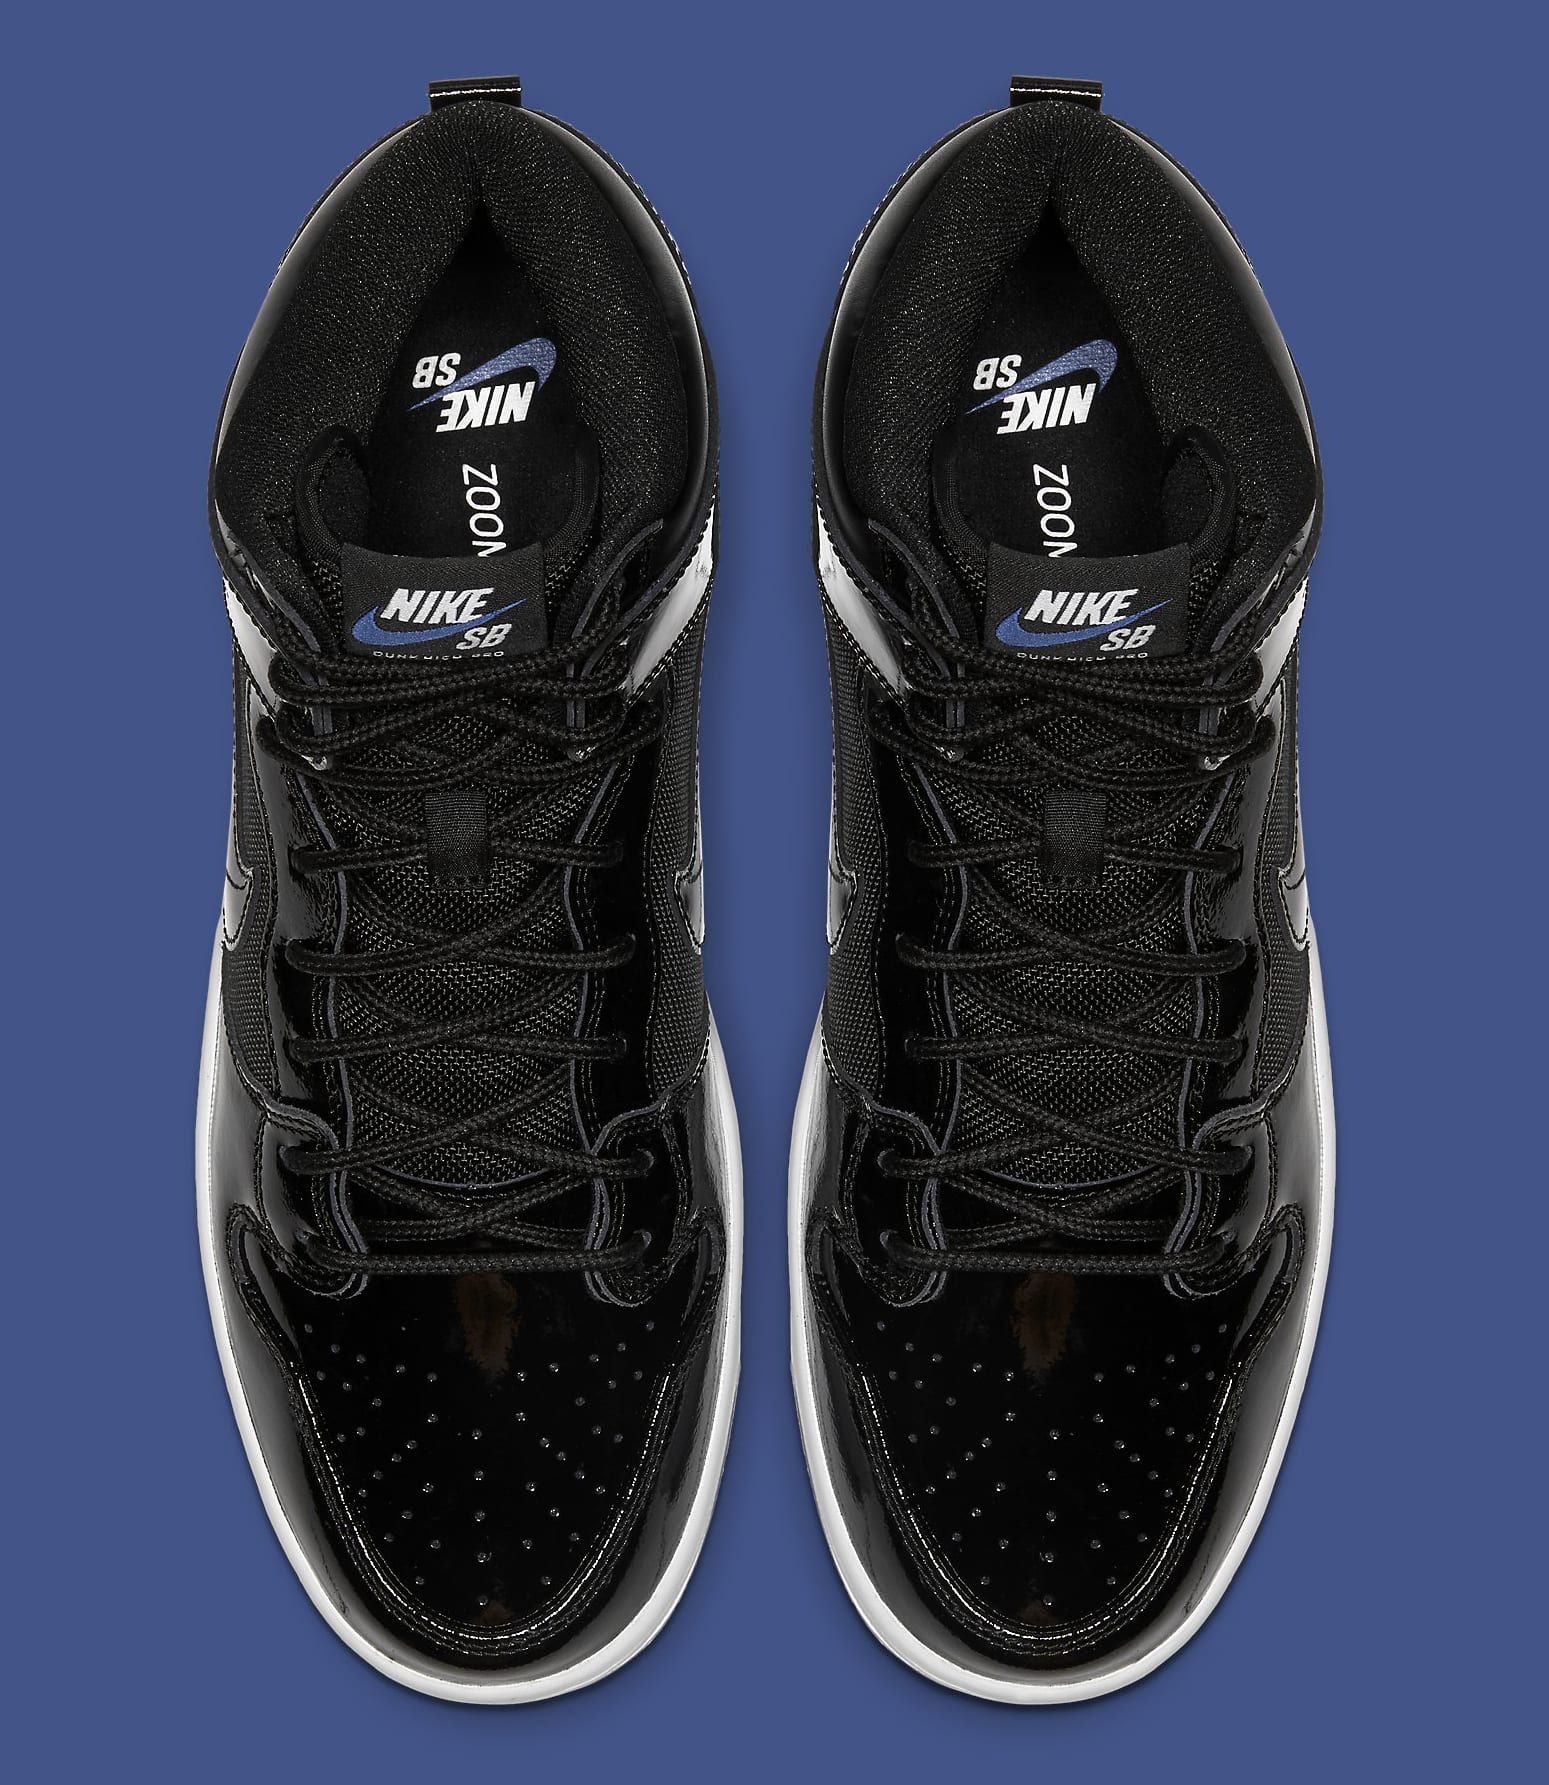 An Air Jordan 11 Inspires This Upcoming Nike SB Dunk High | Complex